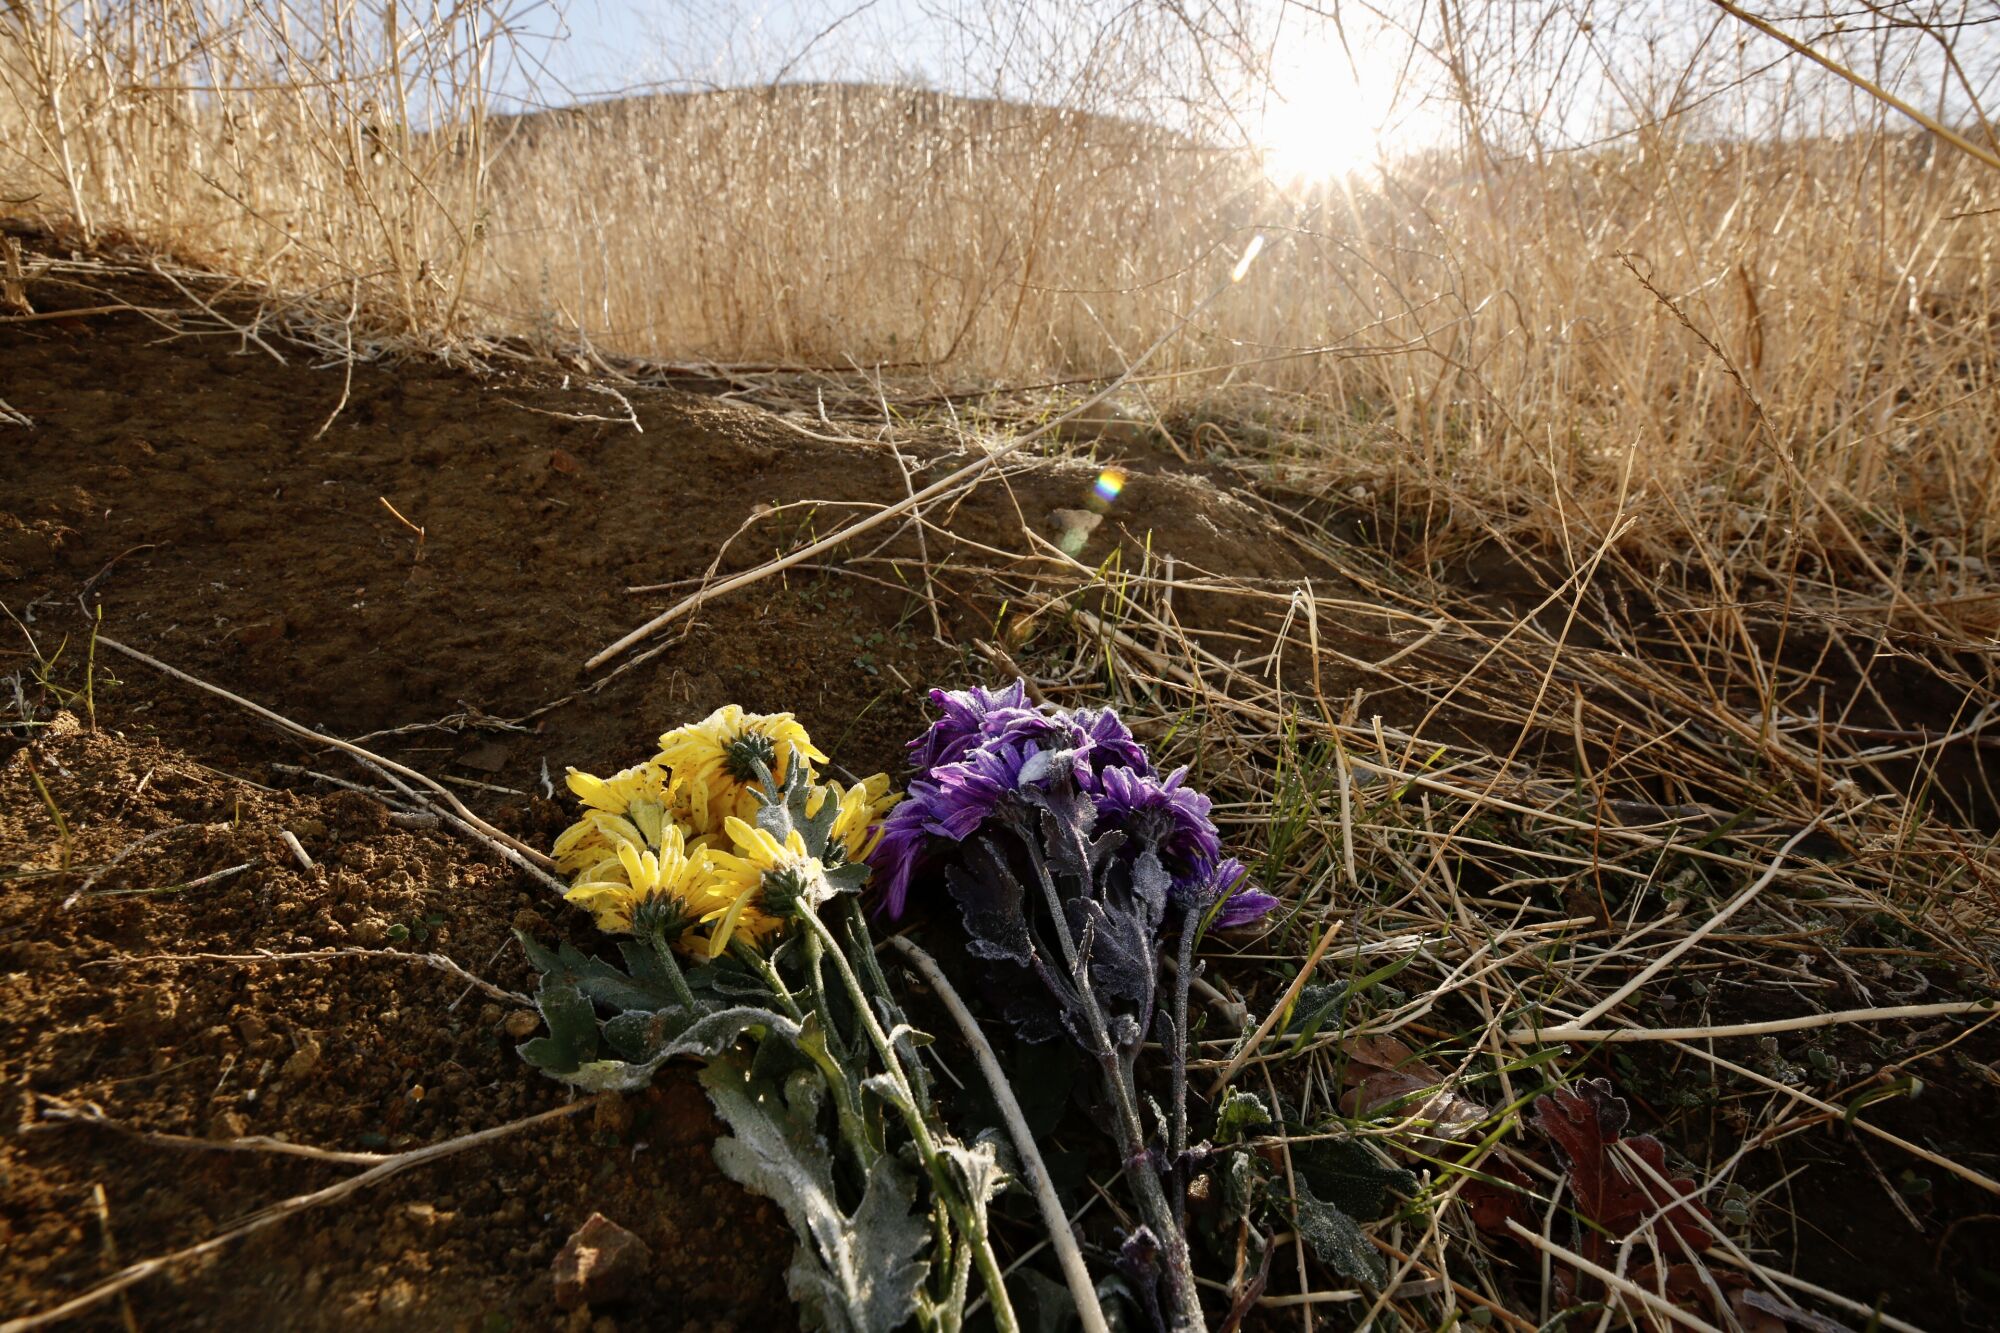 Morning sun illuminates flowers lying amid brush on a hill.